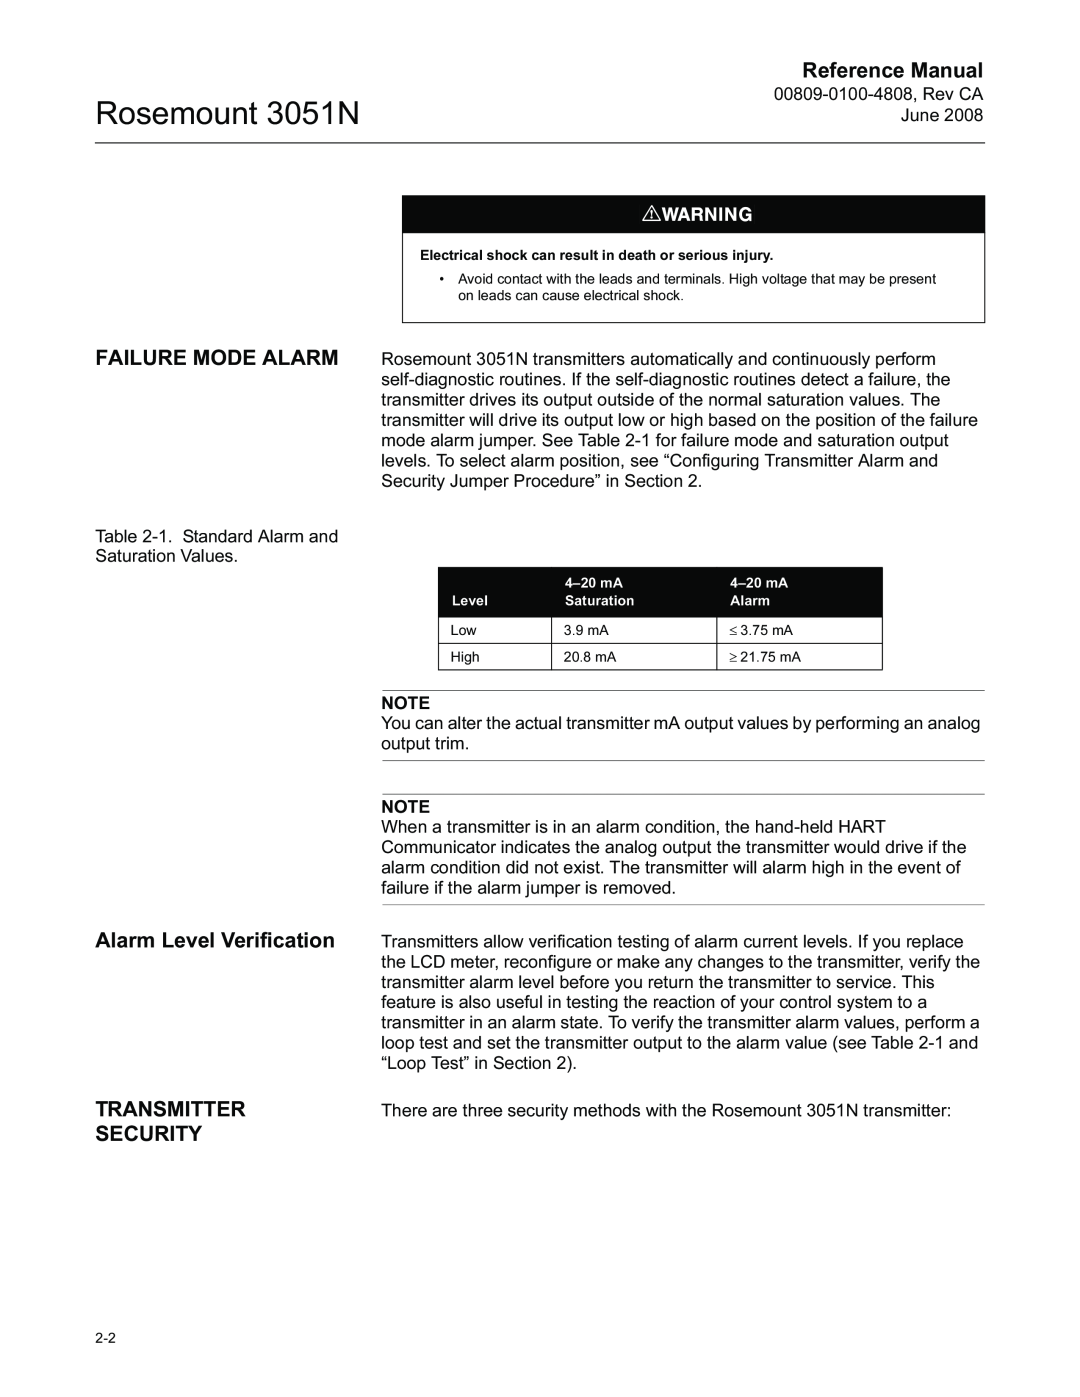 Emerson manual Alarm Level Verification, Transmitter, Security, Rosemount 3051N, Reference Manual 